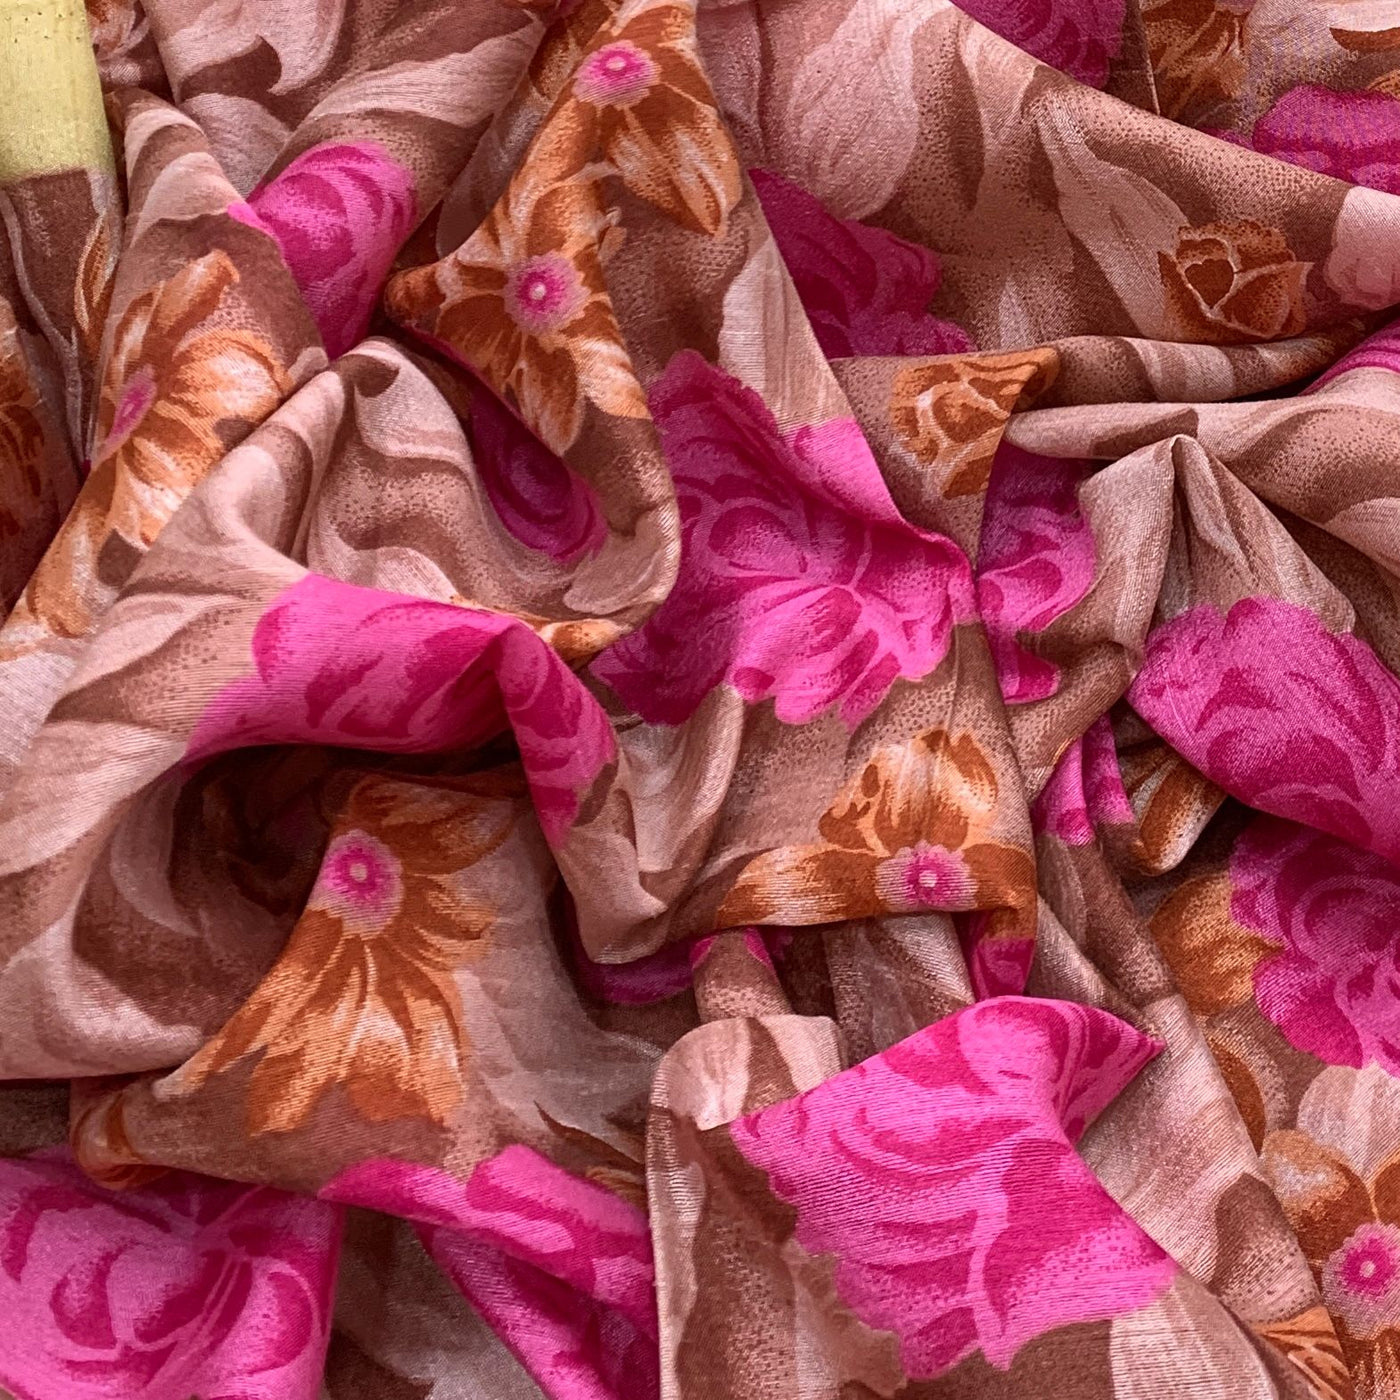 Raw Silk Printed Fabric